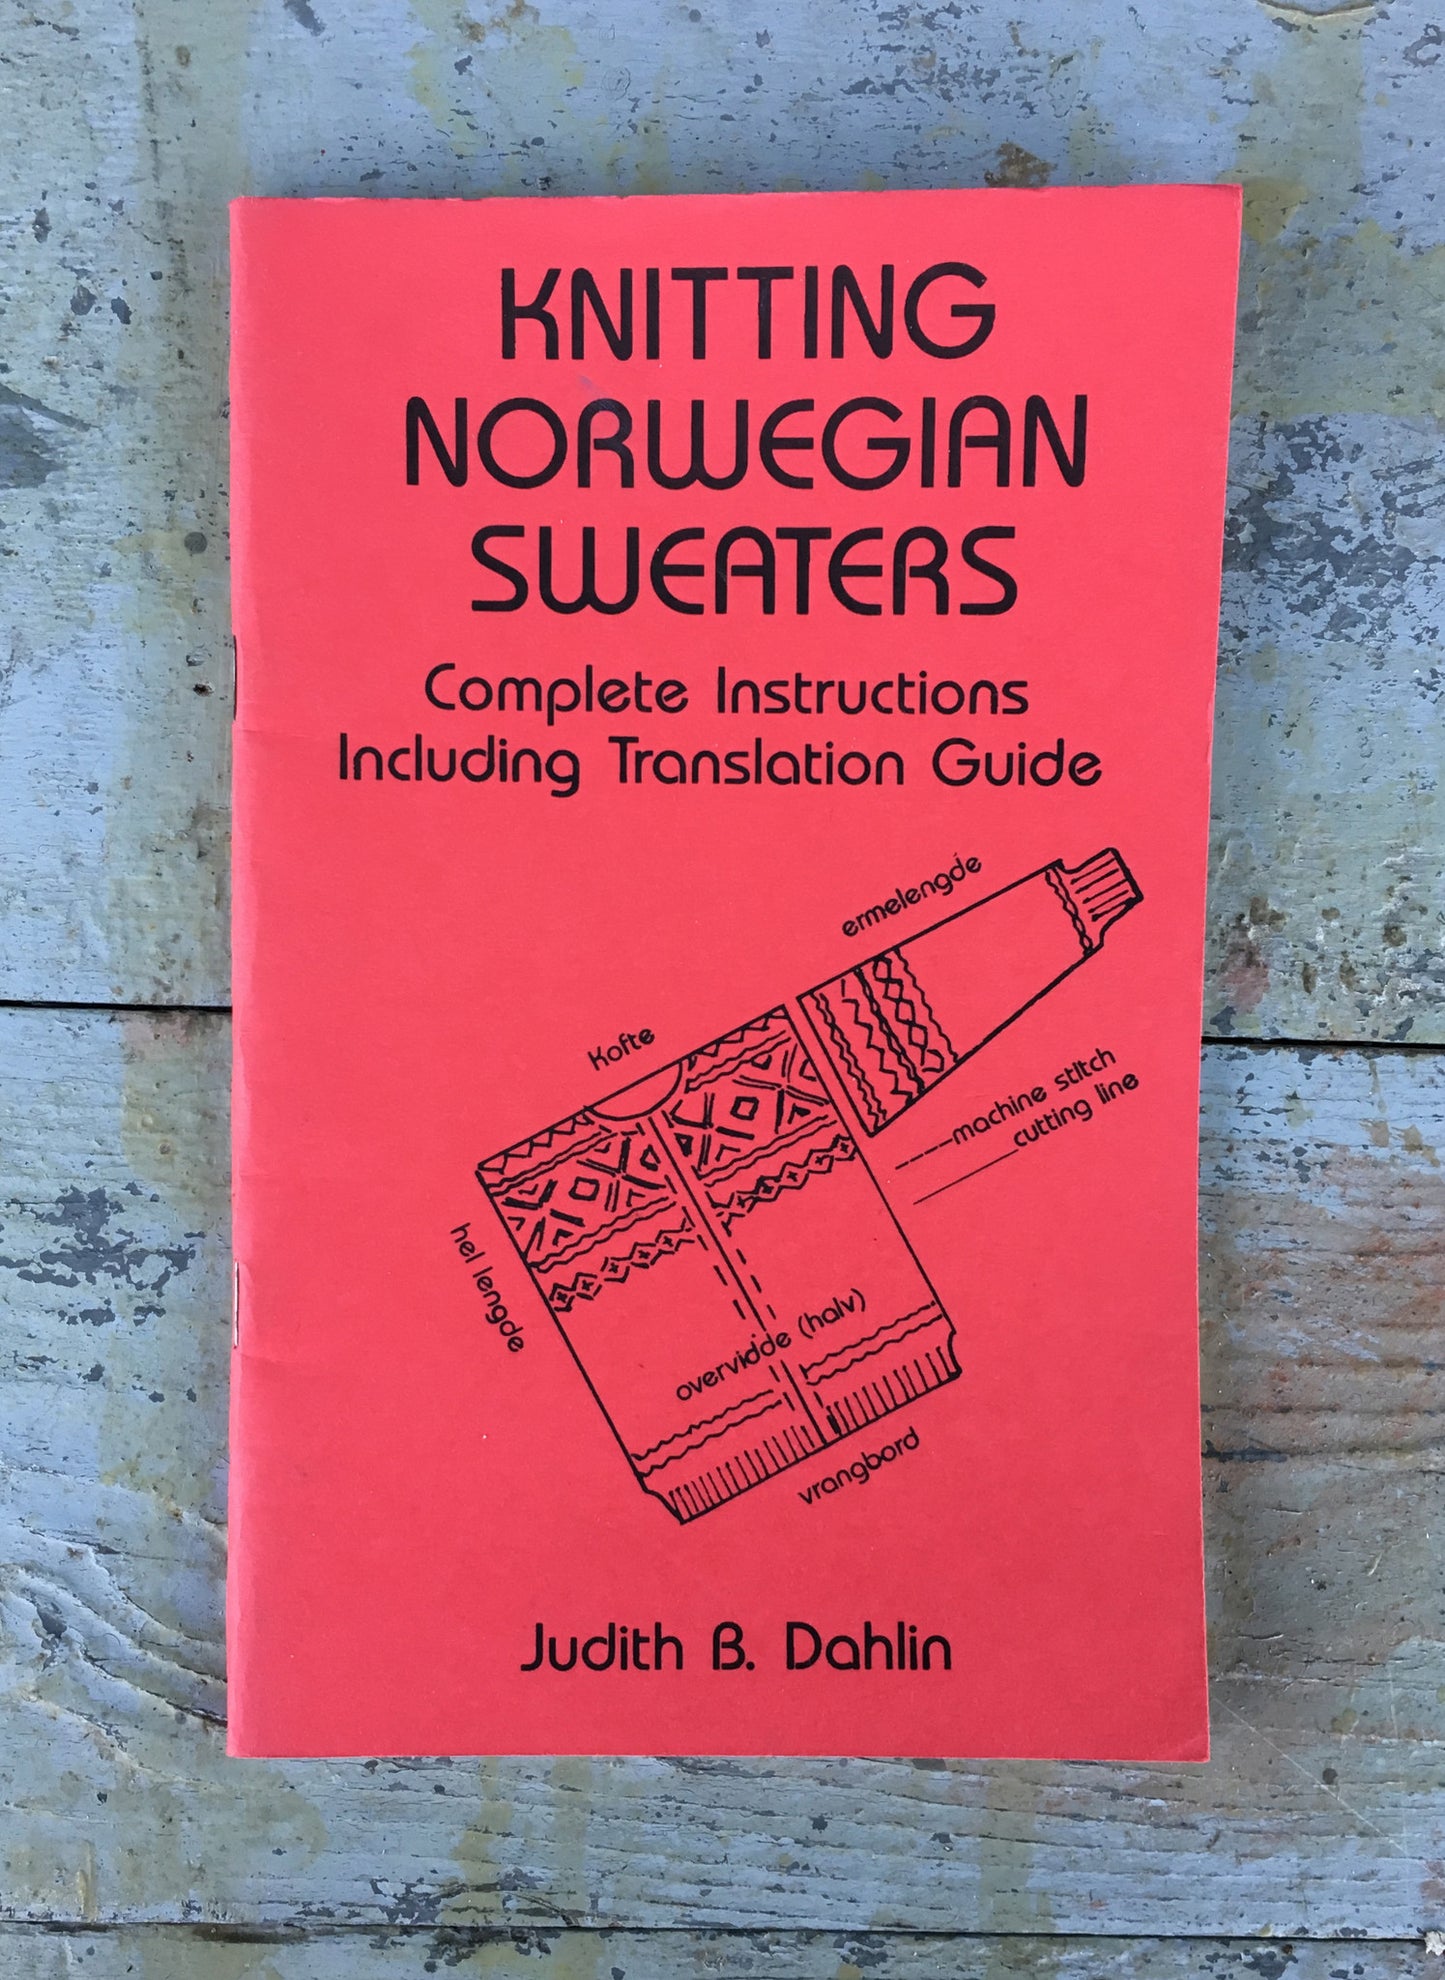 Knitting Norwegian Sweaters by Judith B. Dahlin